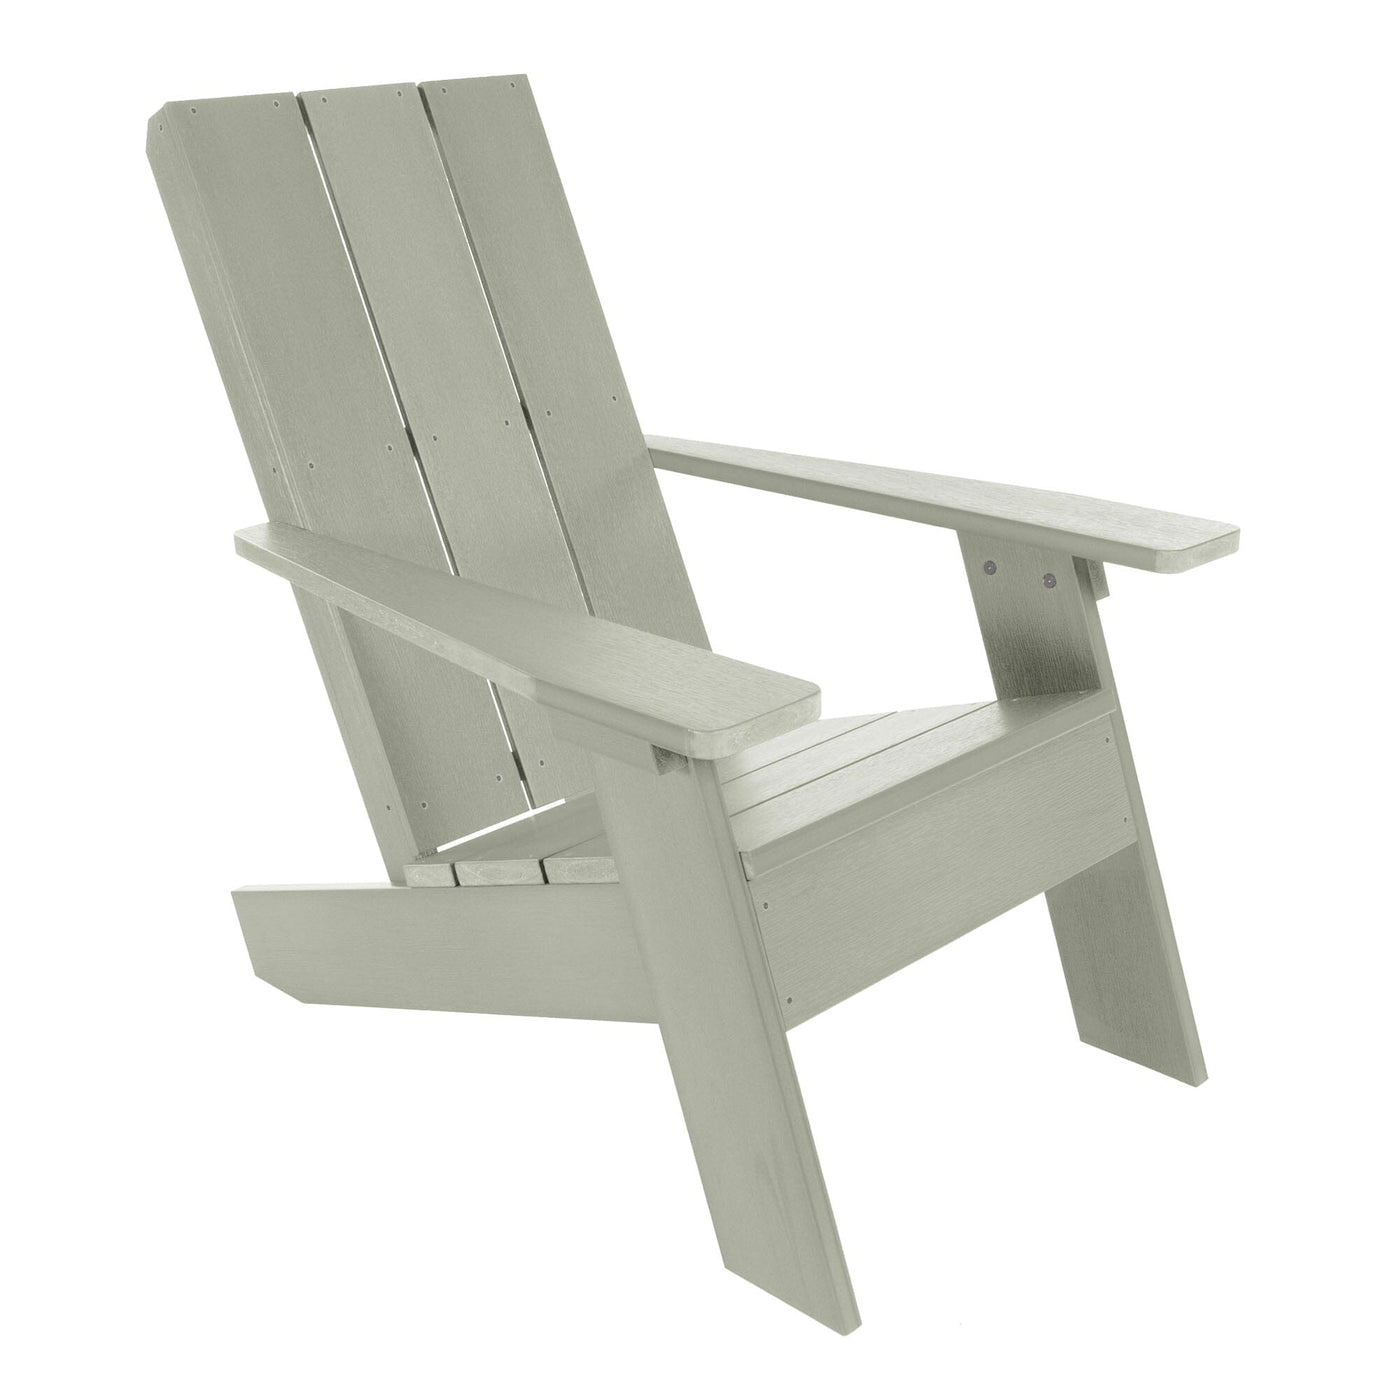 Italica Modern Adirondack Chair in Eucalyptus